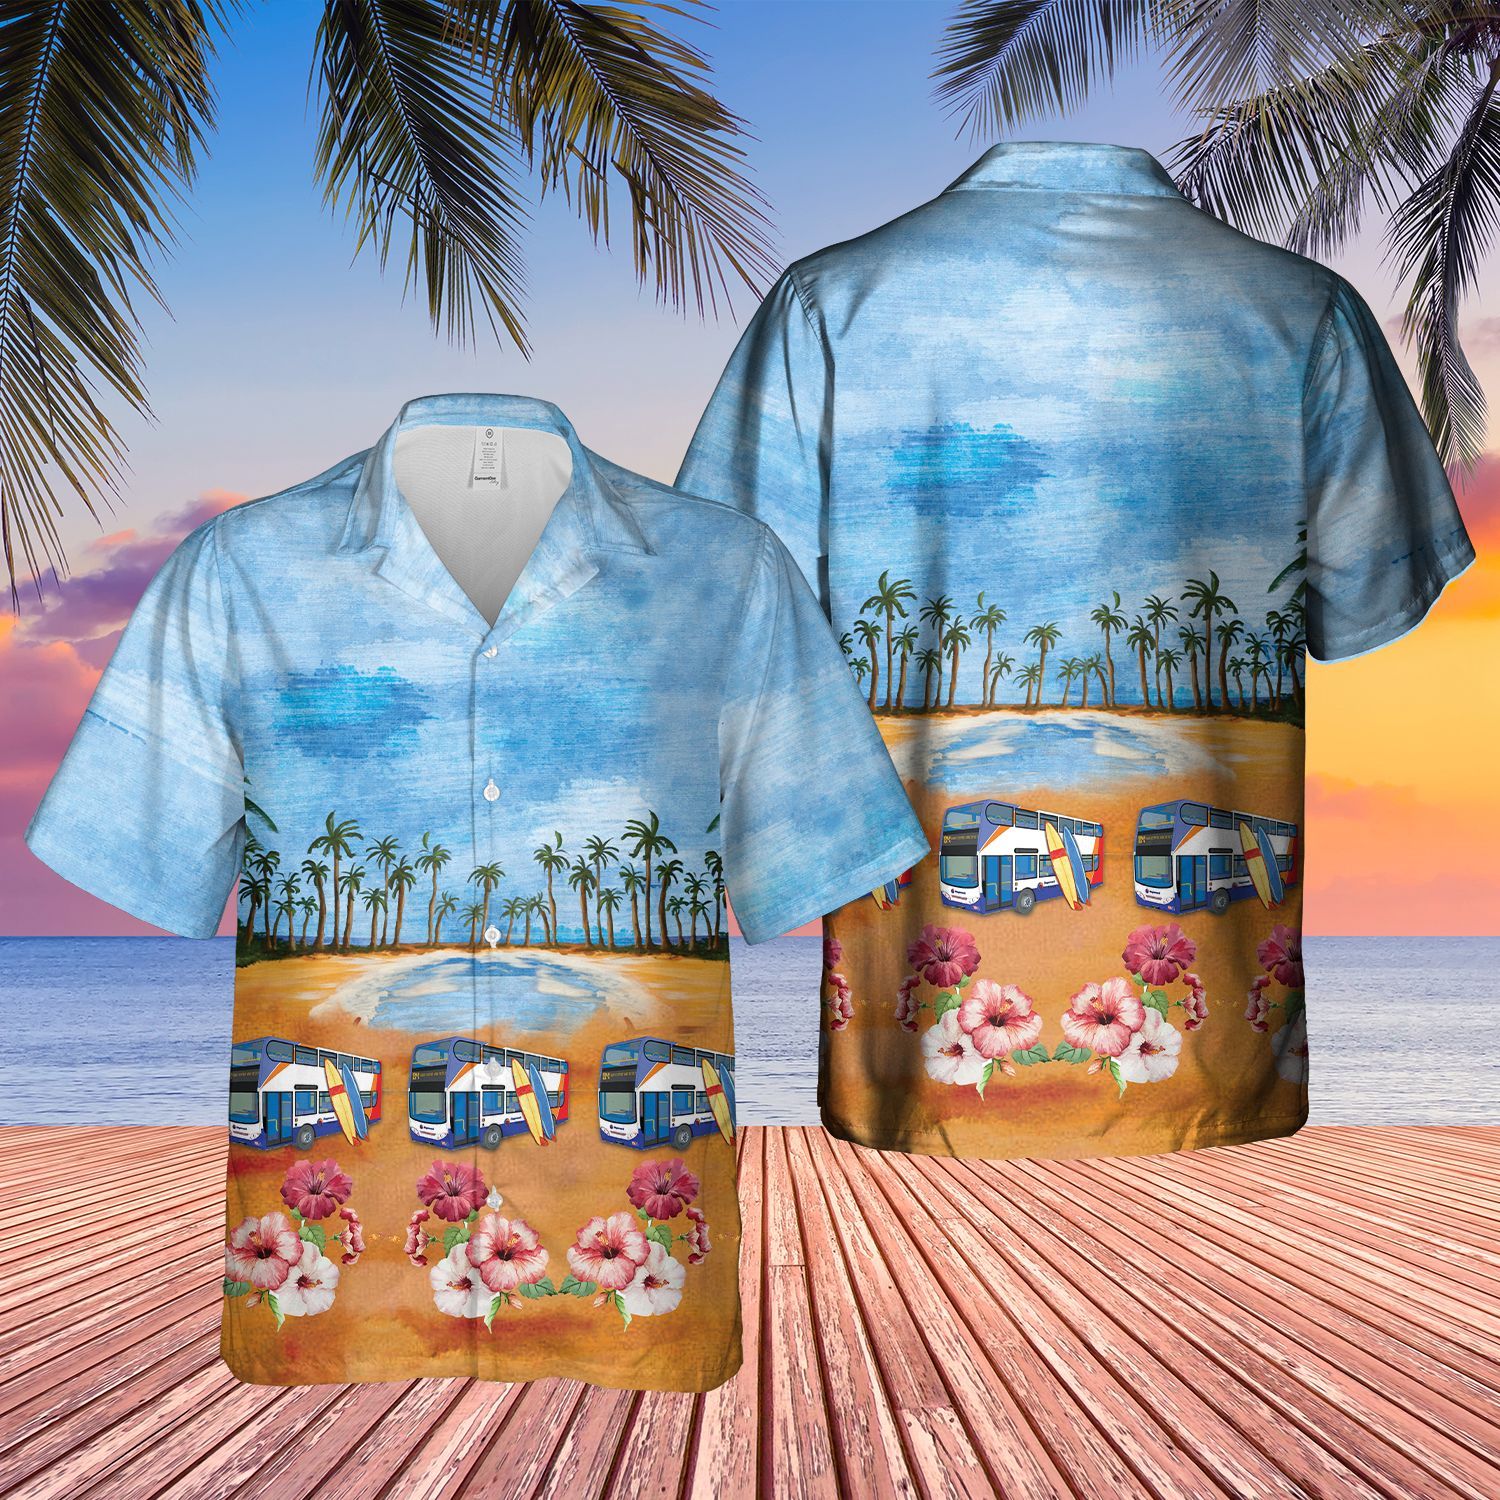 Enjoy your summer with top cool hawaiian shirt below 121